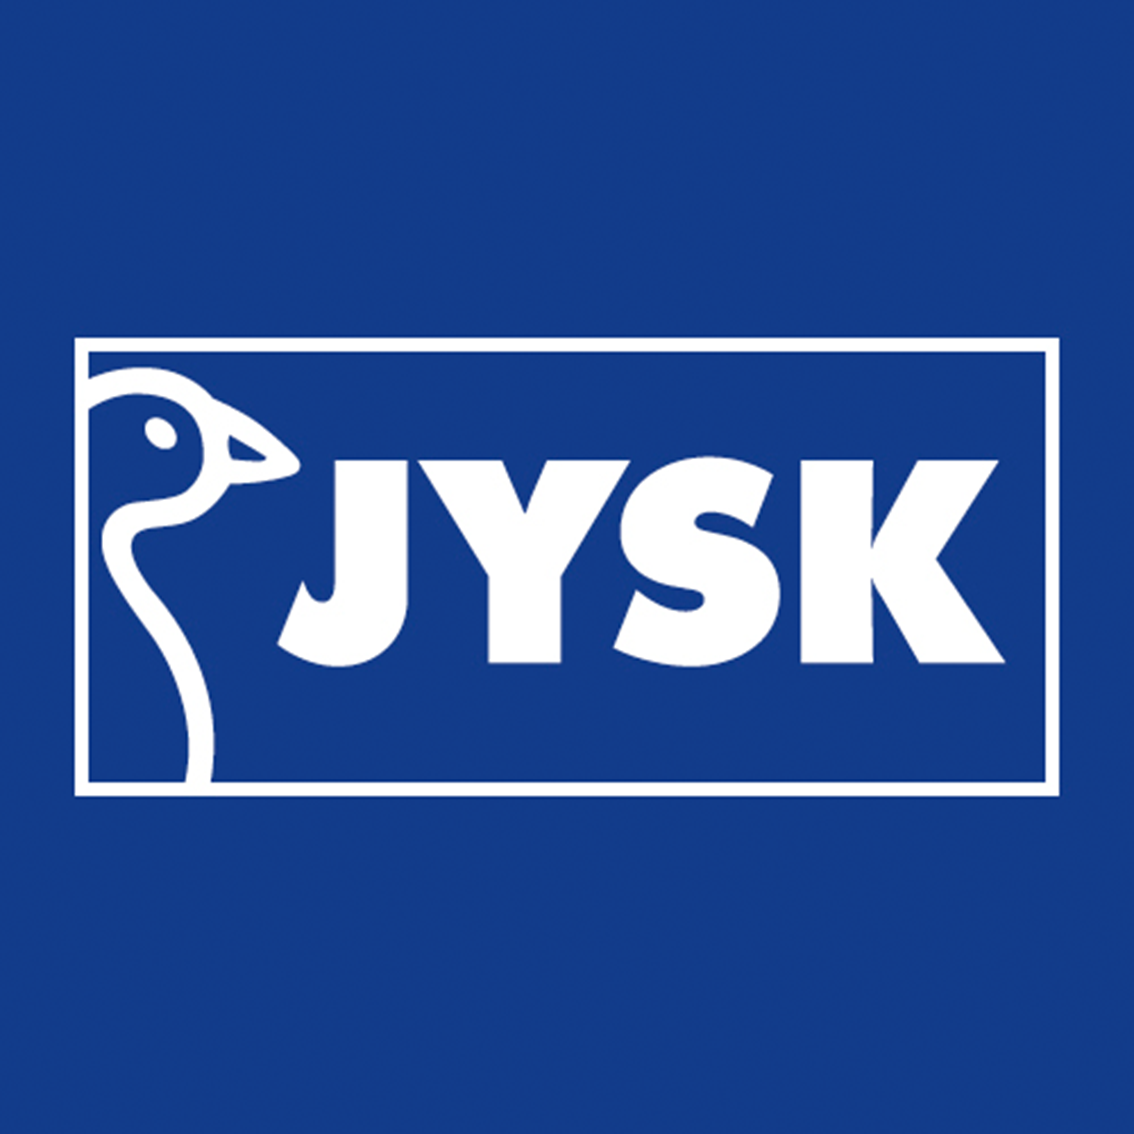 jysk-logo